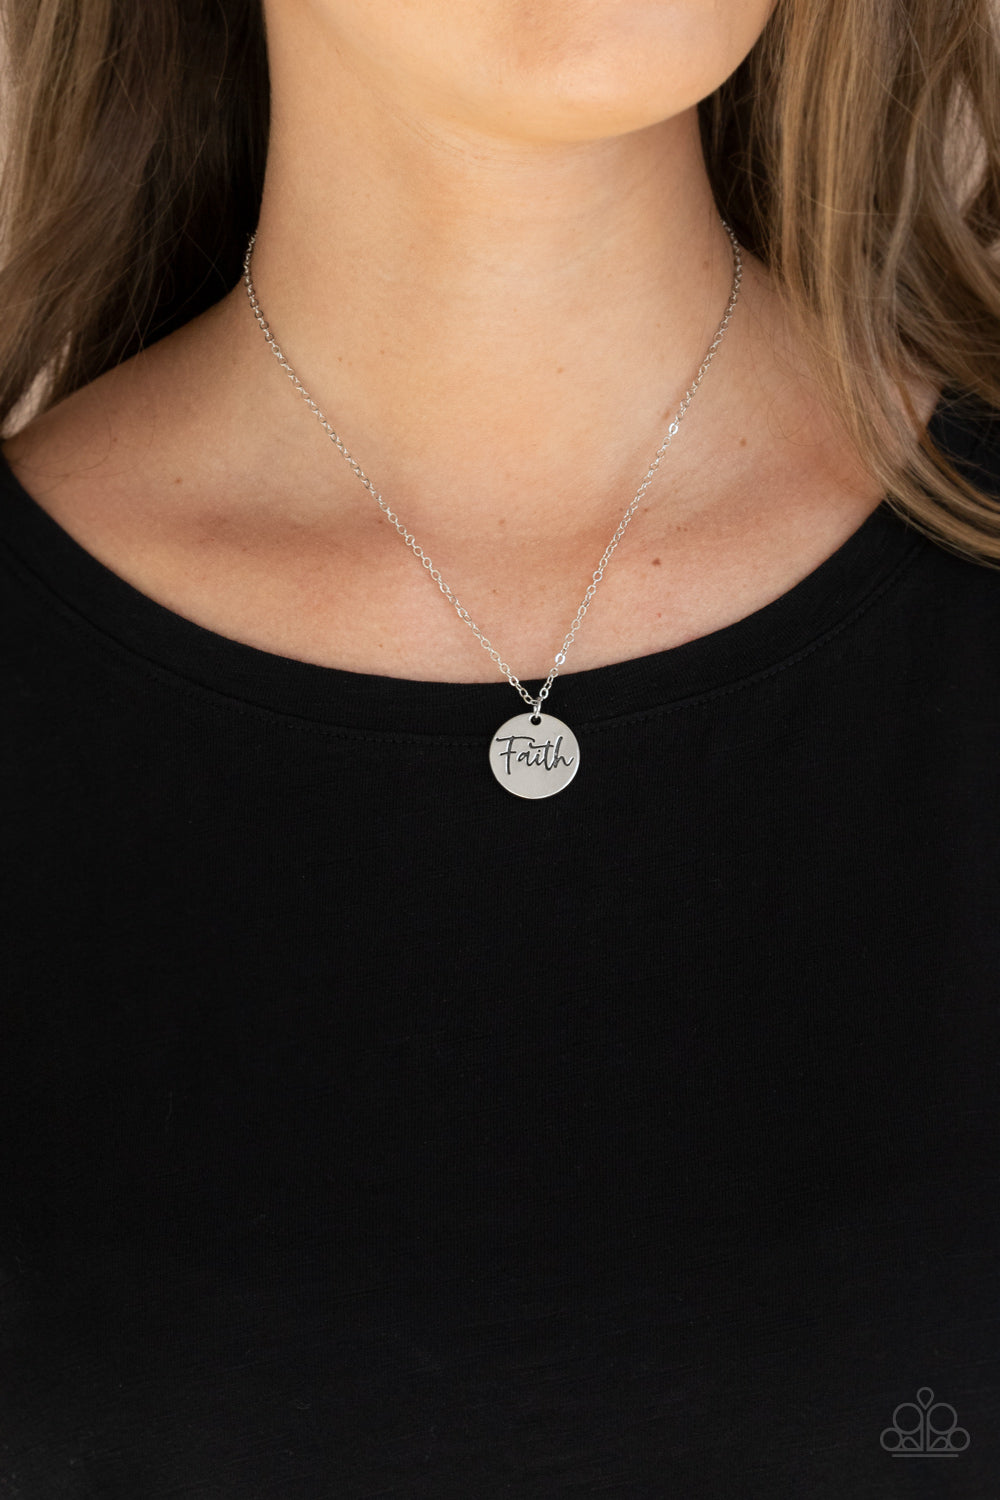 Choose Faith - Silver Necklace Paparazzi Accessories